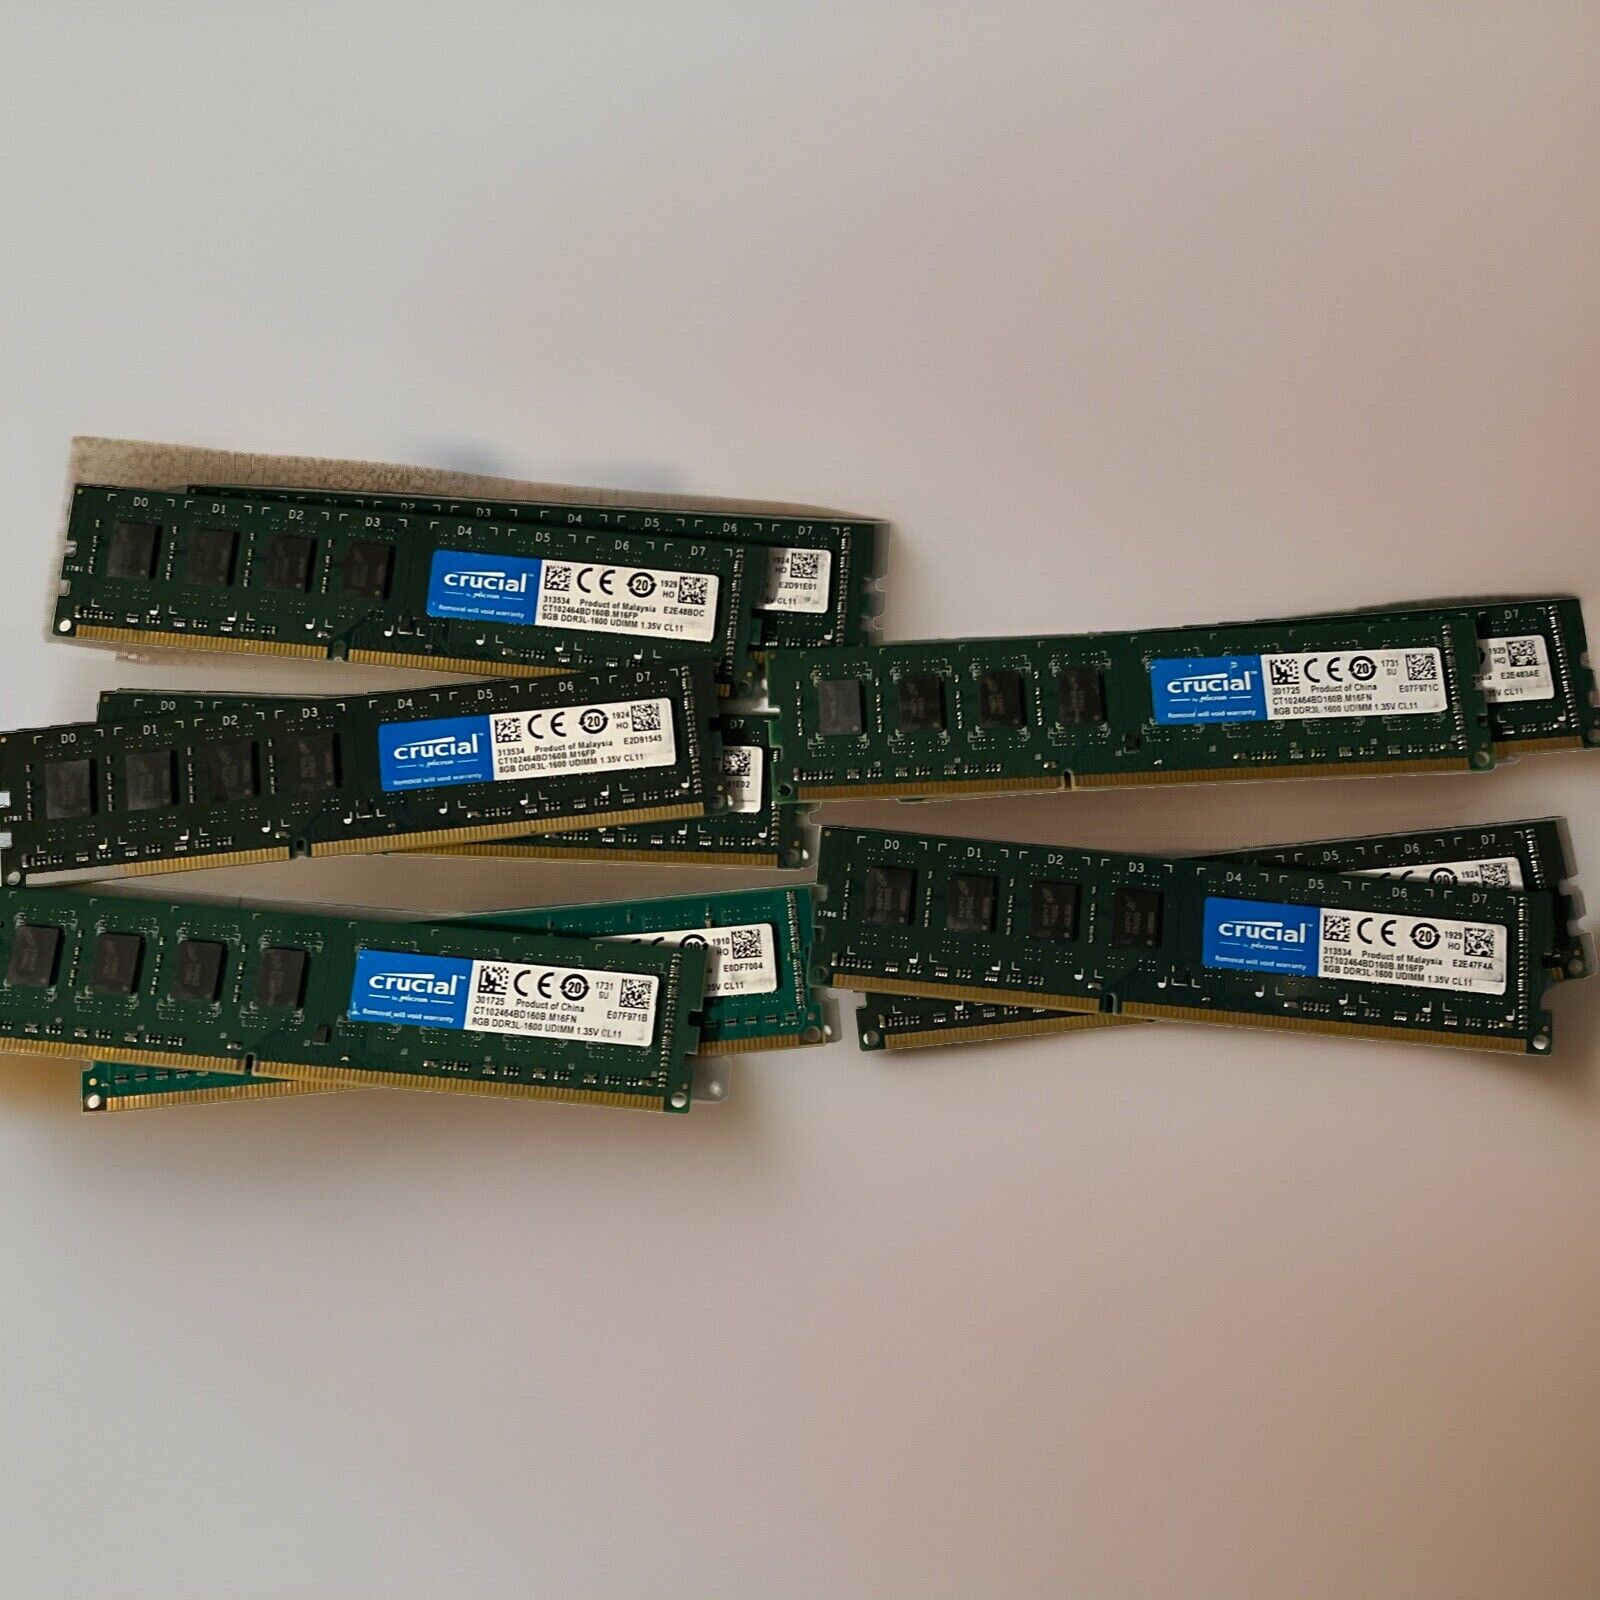 Lot of 10 - Crucial 8GB DDR3L-1600 UDIMM Desktop Memory RAM